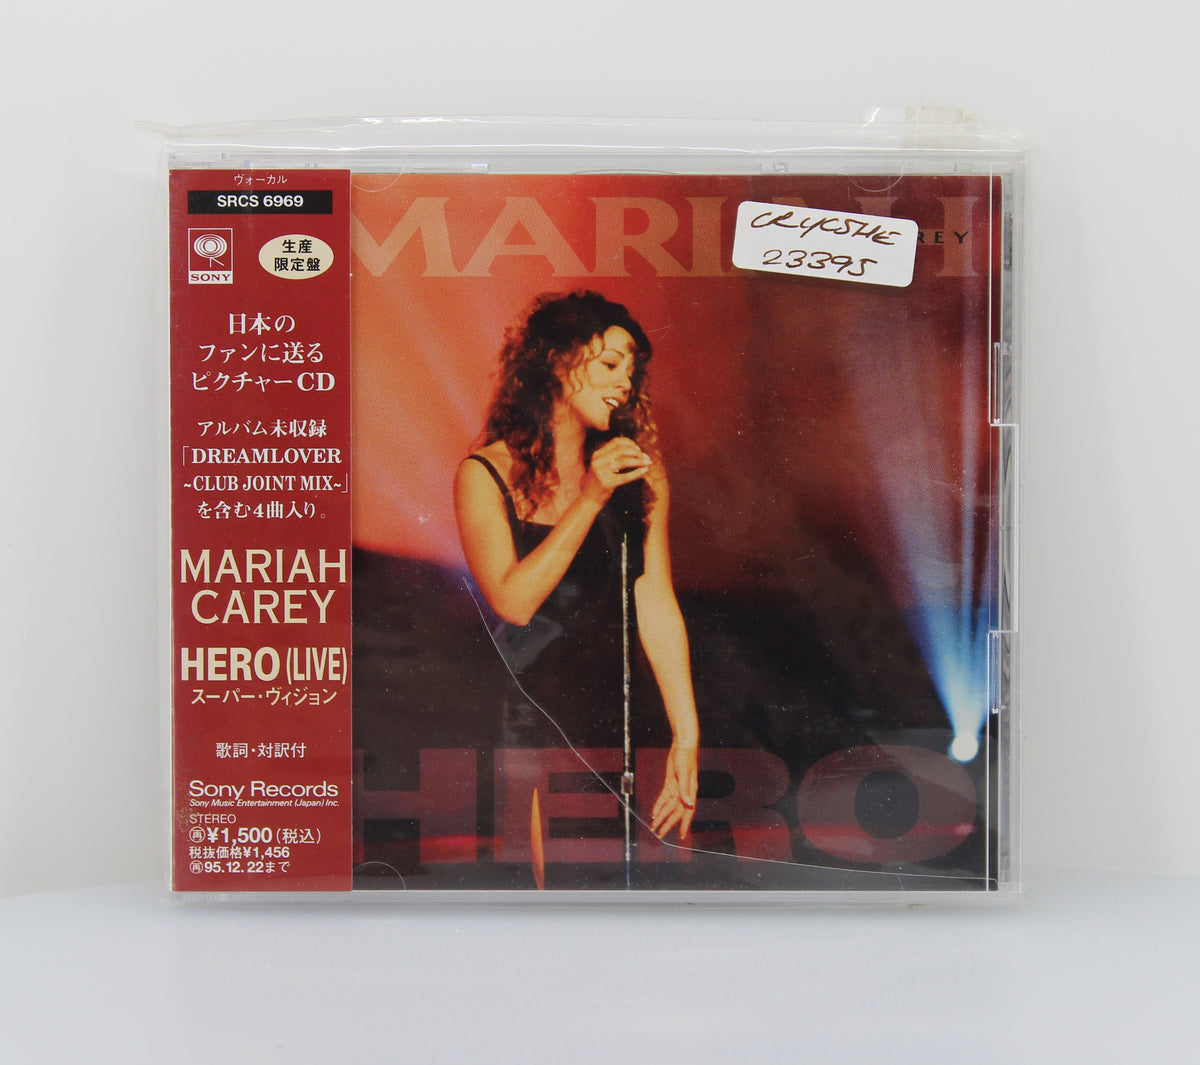 Mariah Carey – Hero, CD, Single, Limited Edition, Japan 1993